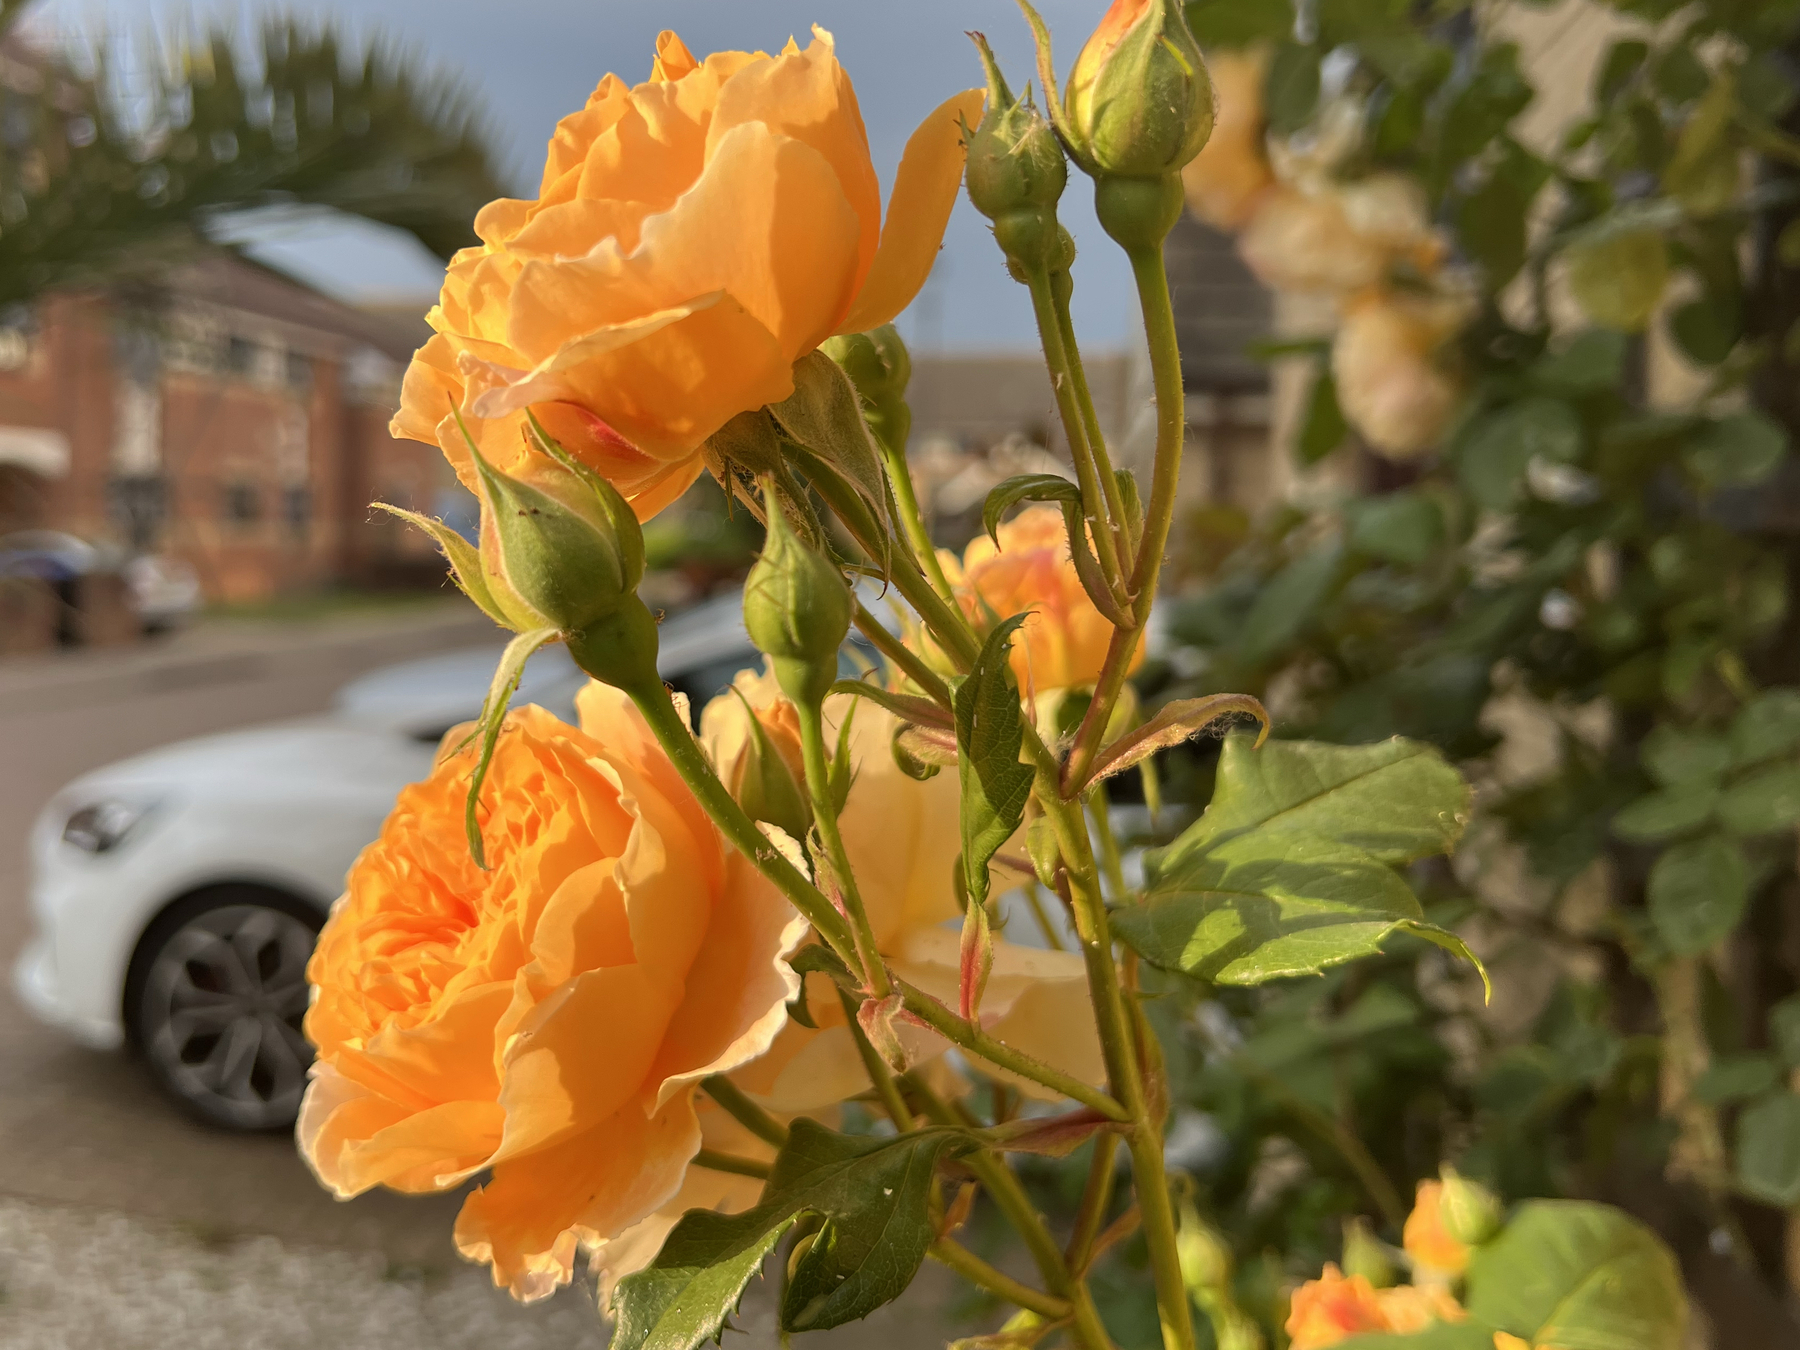 Margarita roses in bloom